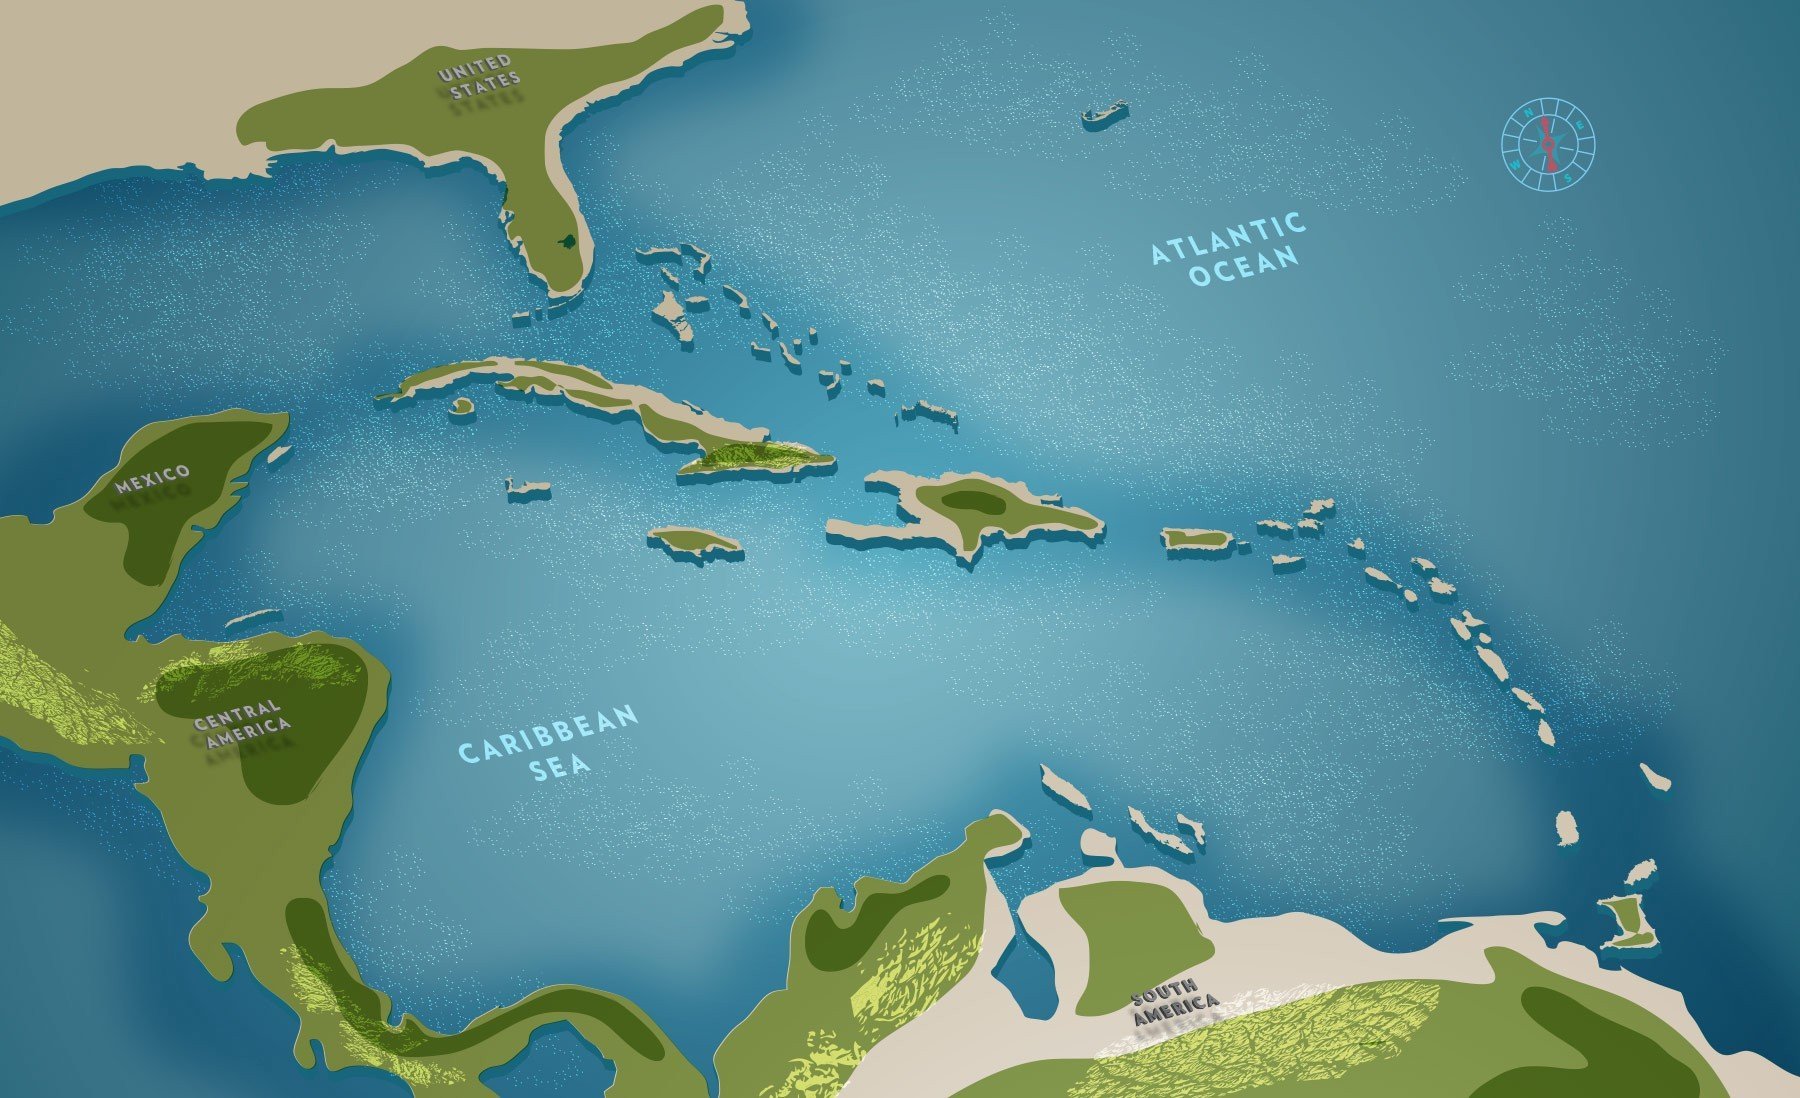 Географические острова. Карта Карибского моря с островами. Карибы Карибские острова карта мира. Острова Карибского моря на карте мира. Границы Карибского моря на карте.